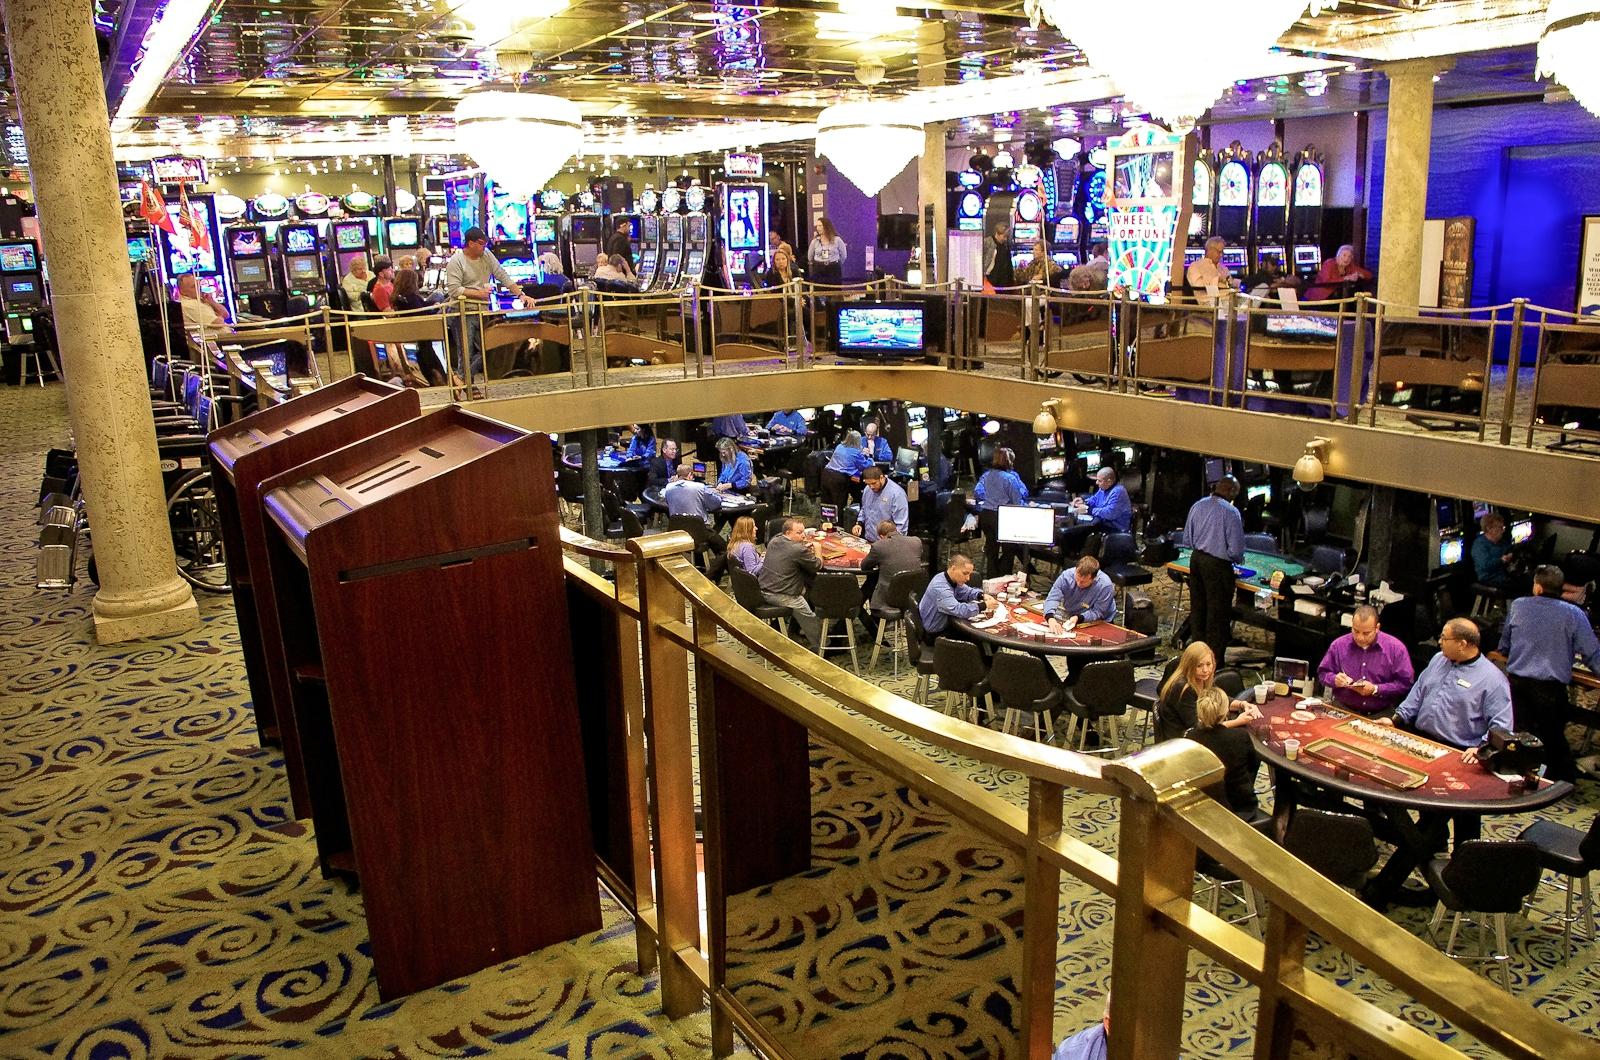 gambling casinos in florida